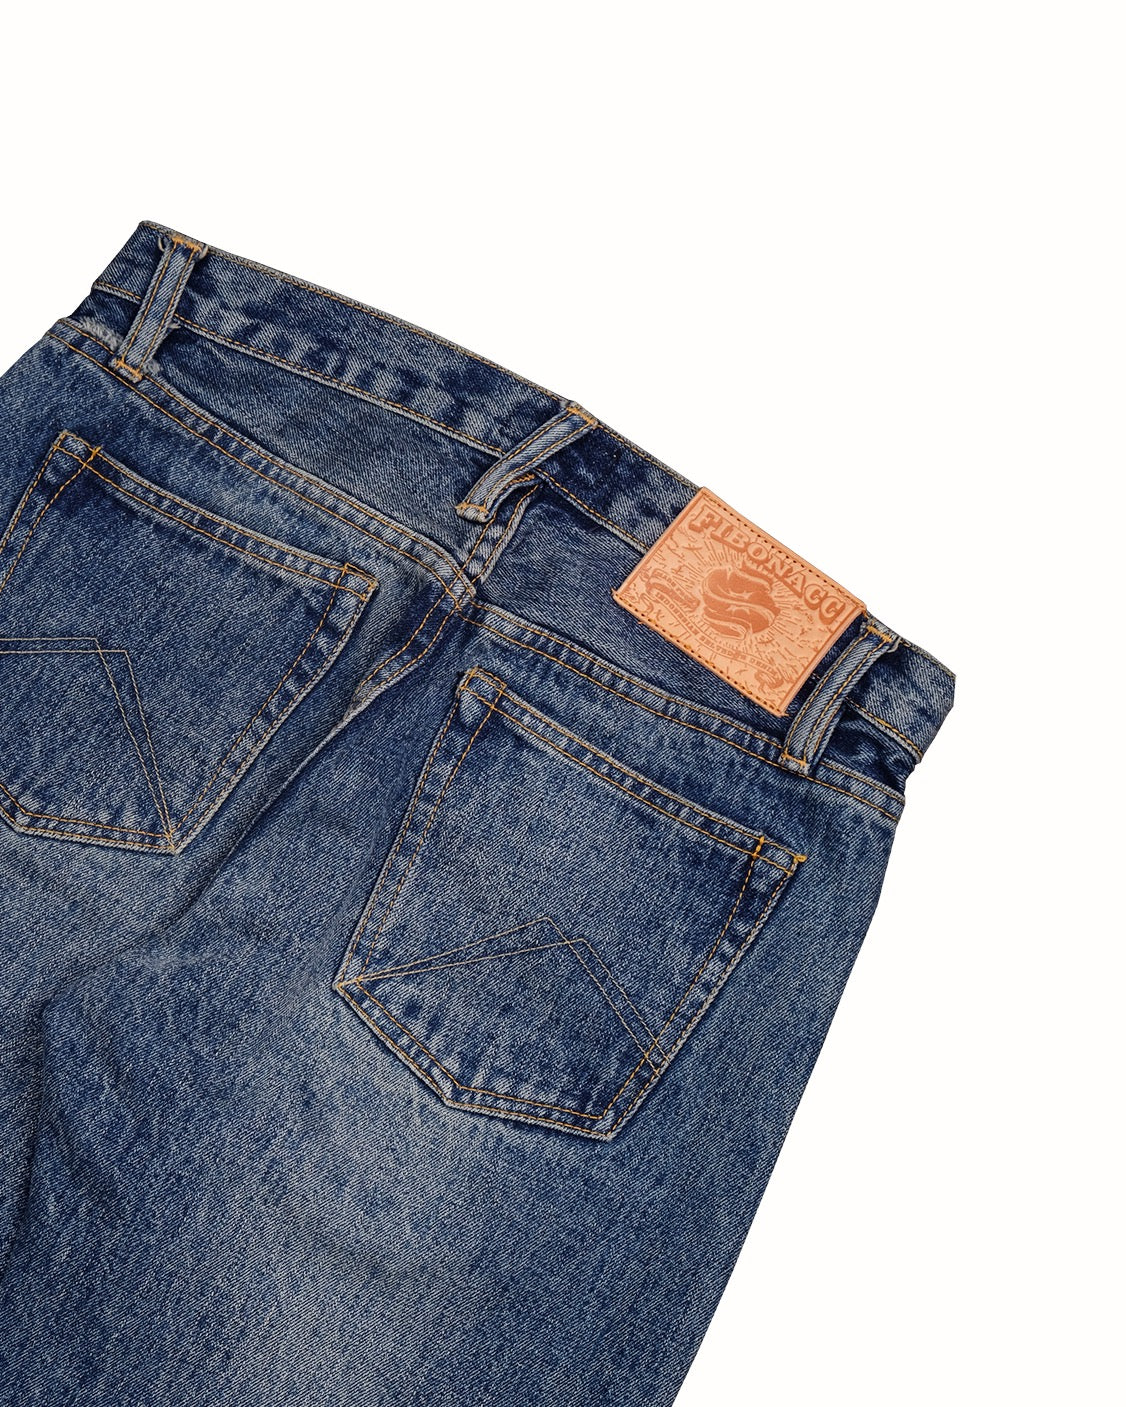 Barris II - Prewashed Indigo Selvedge Jeans – Aye & Co